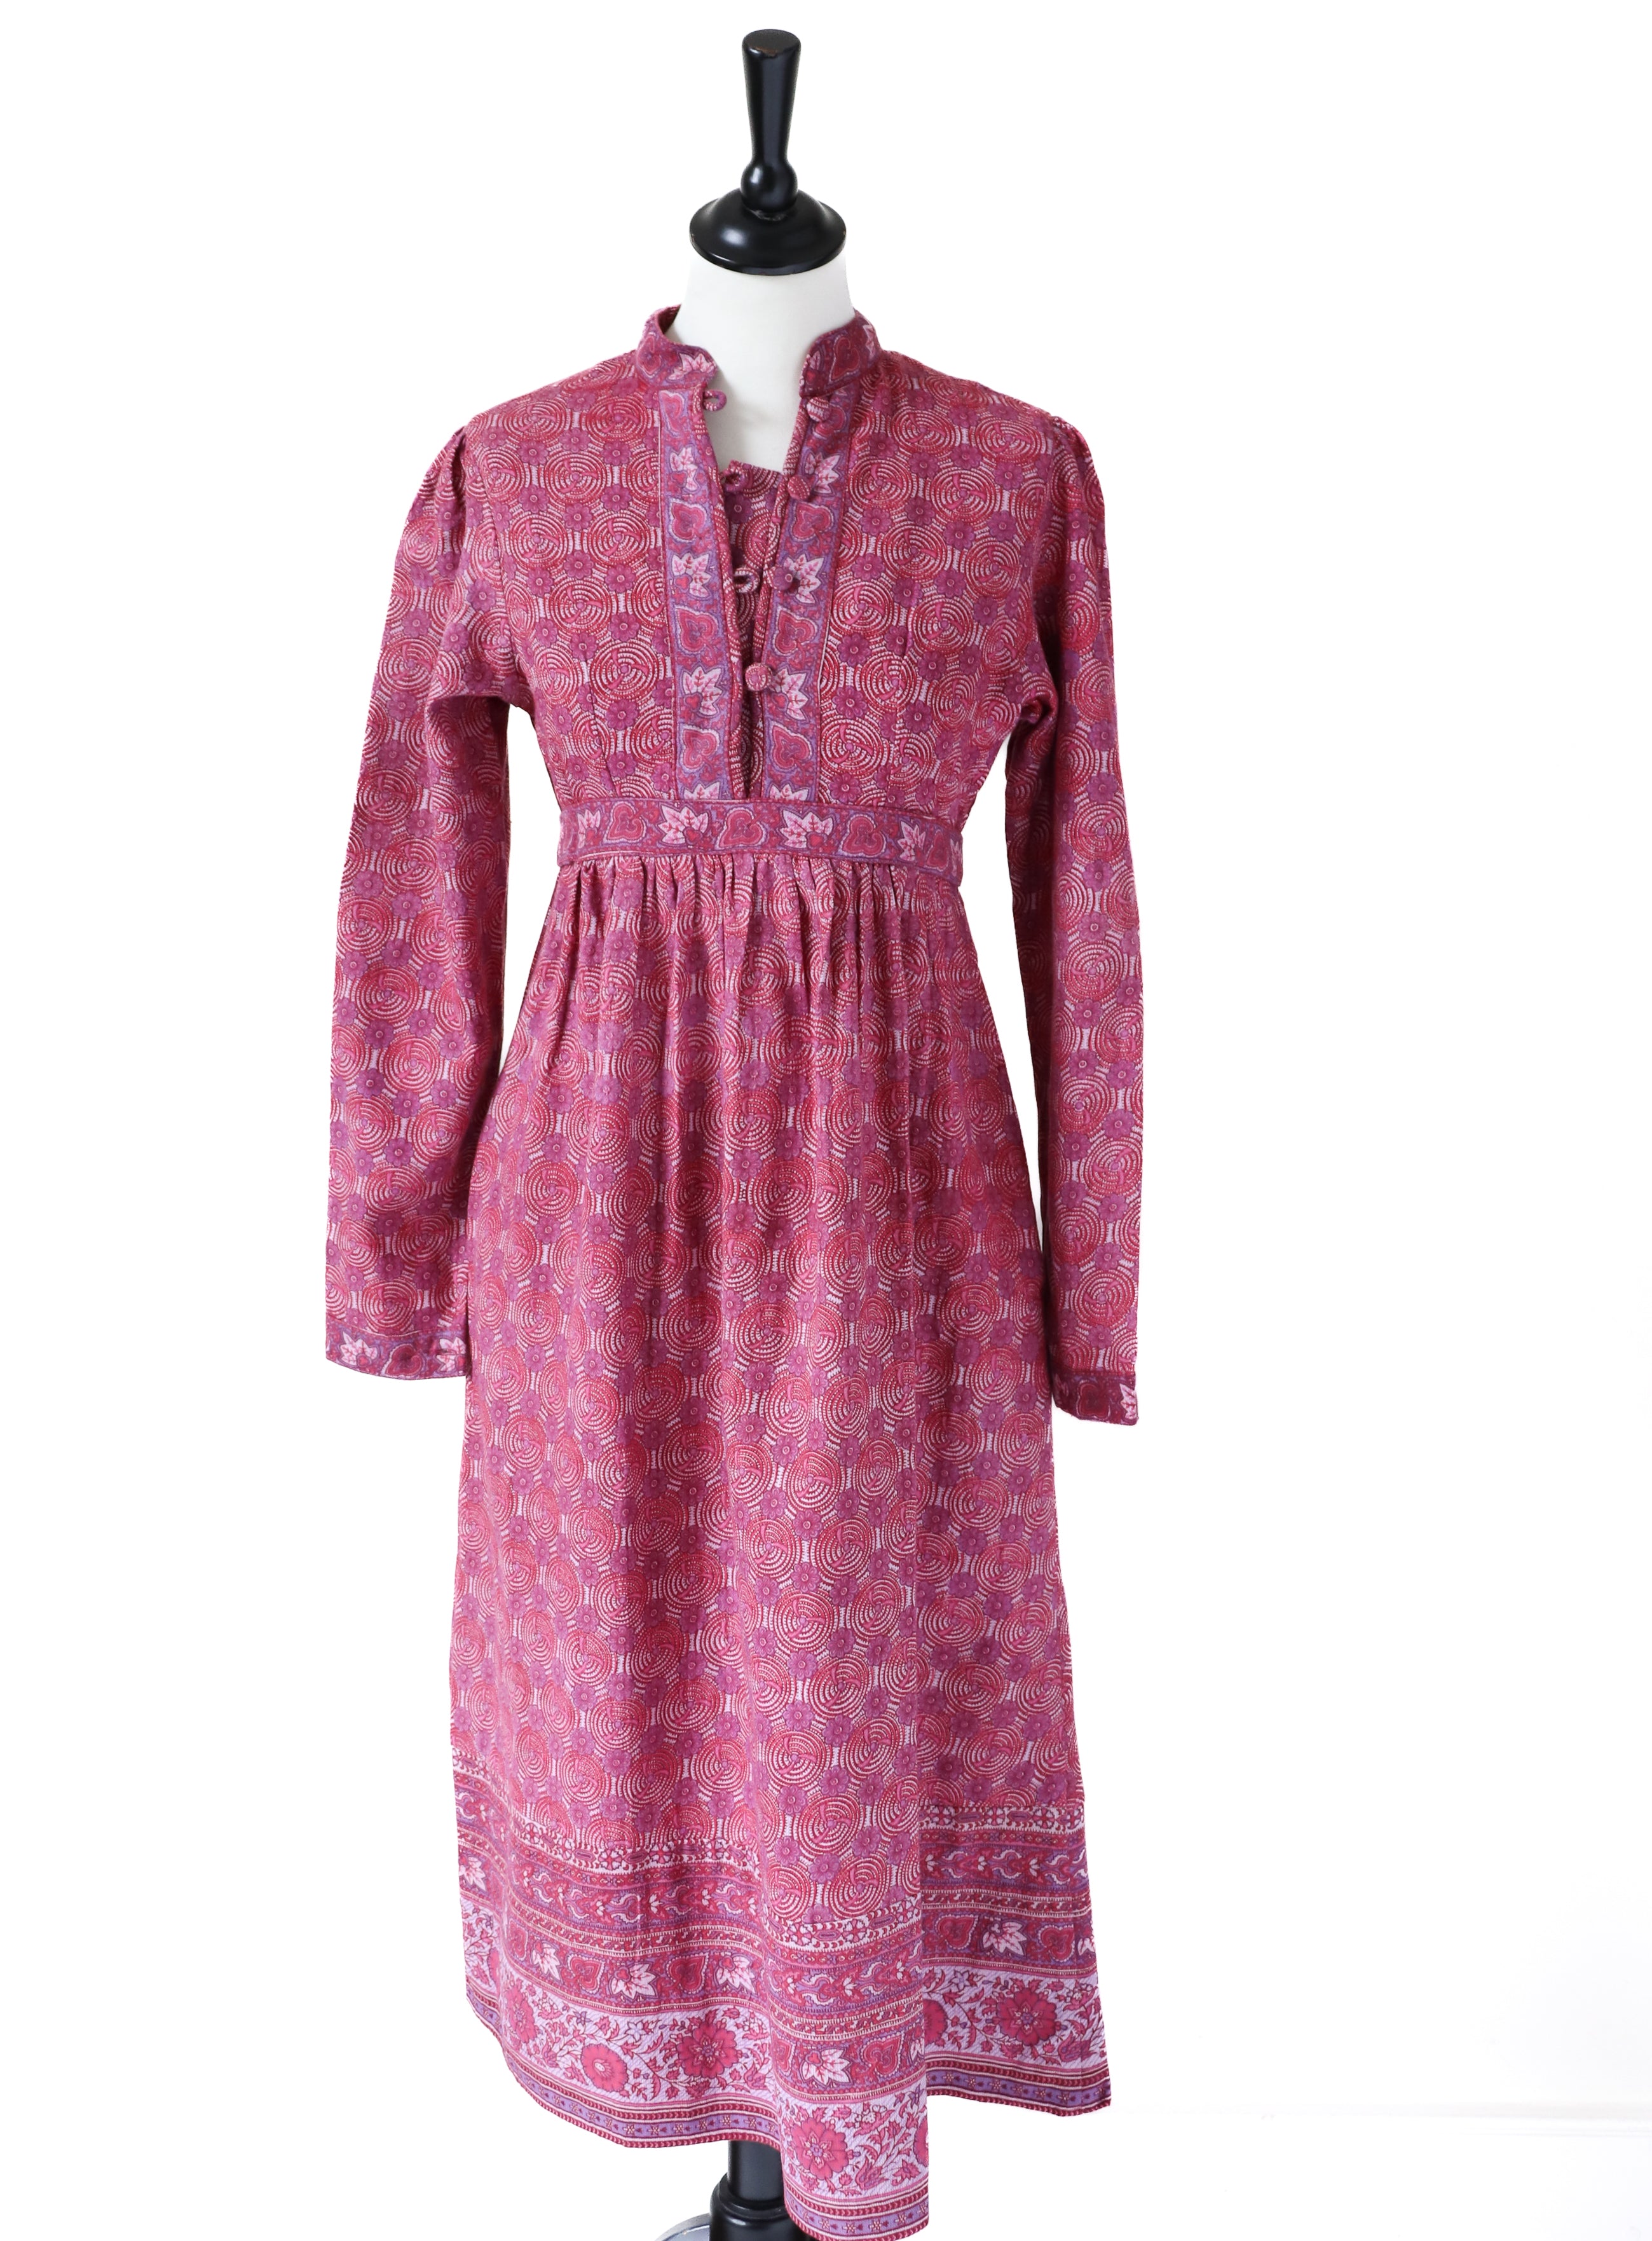 Ritu Kumar Vintage Block Print Cotton Dress - Empire Line - Pink Red -  S /  10